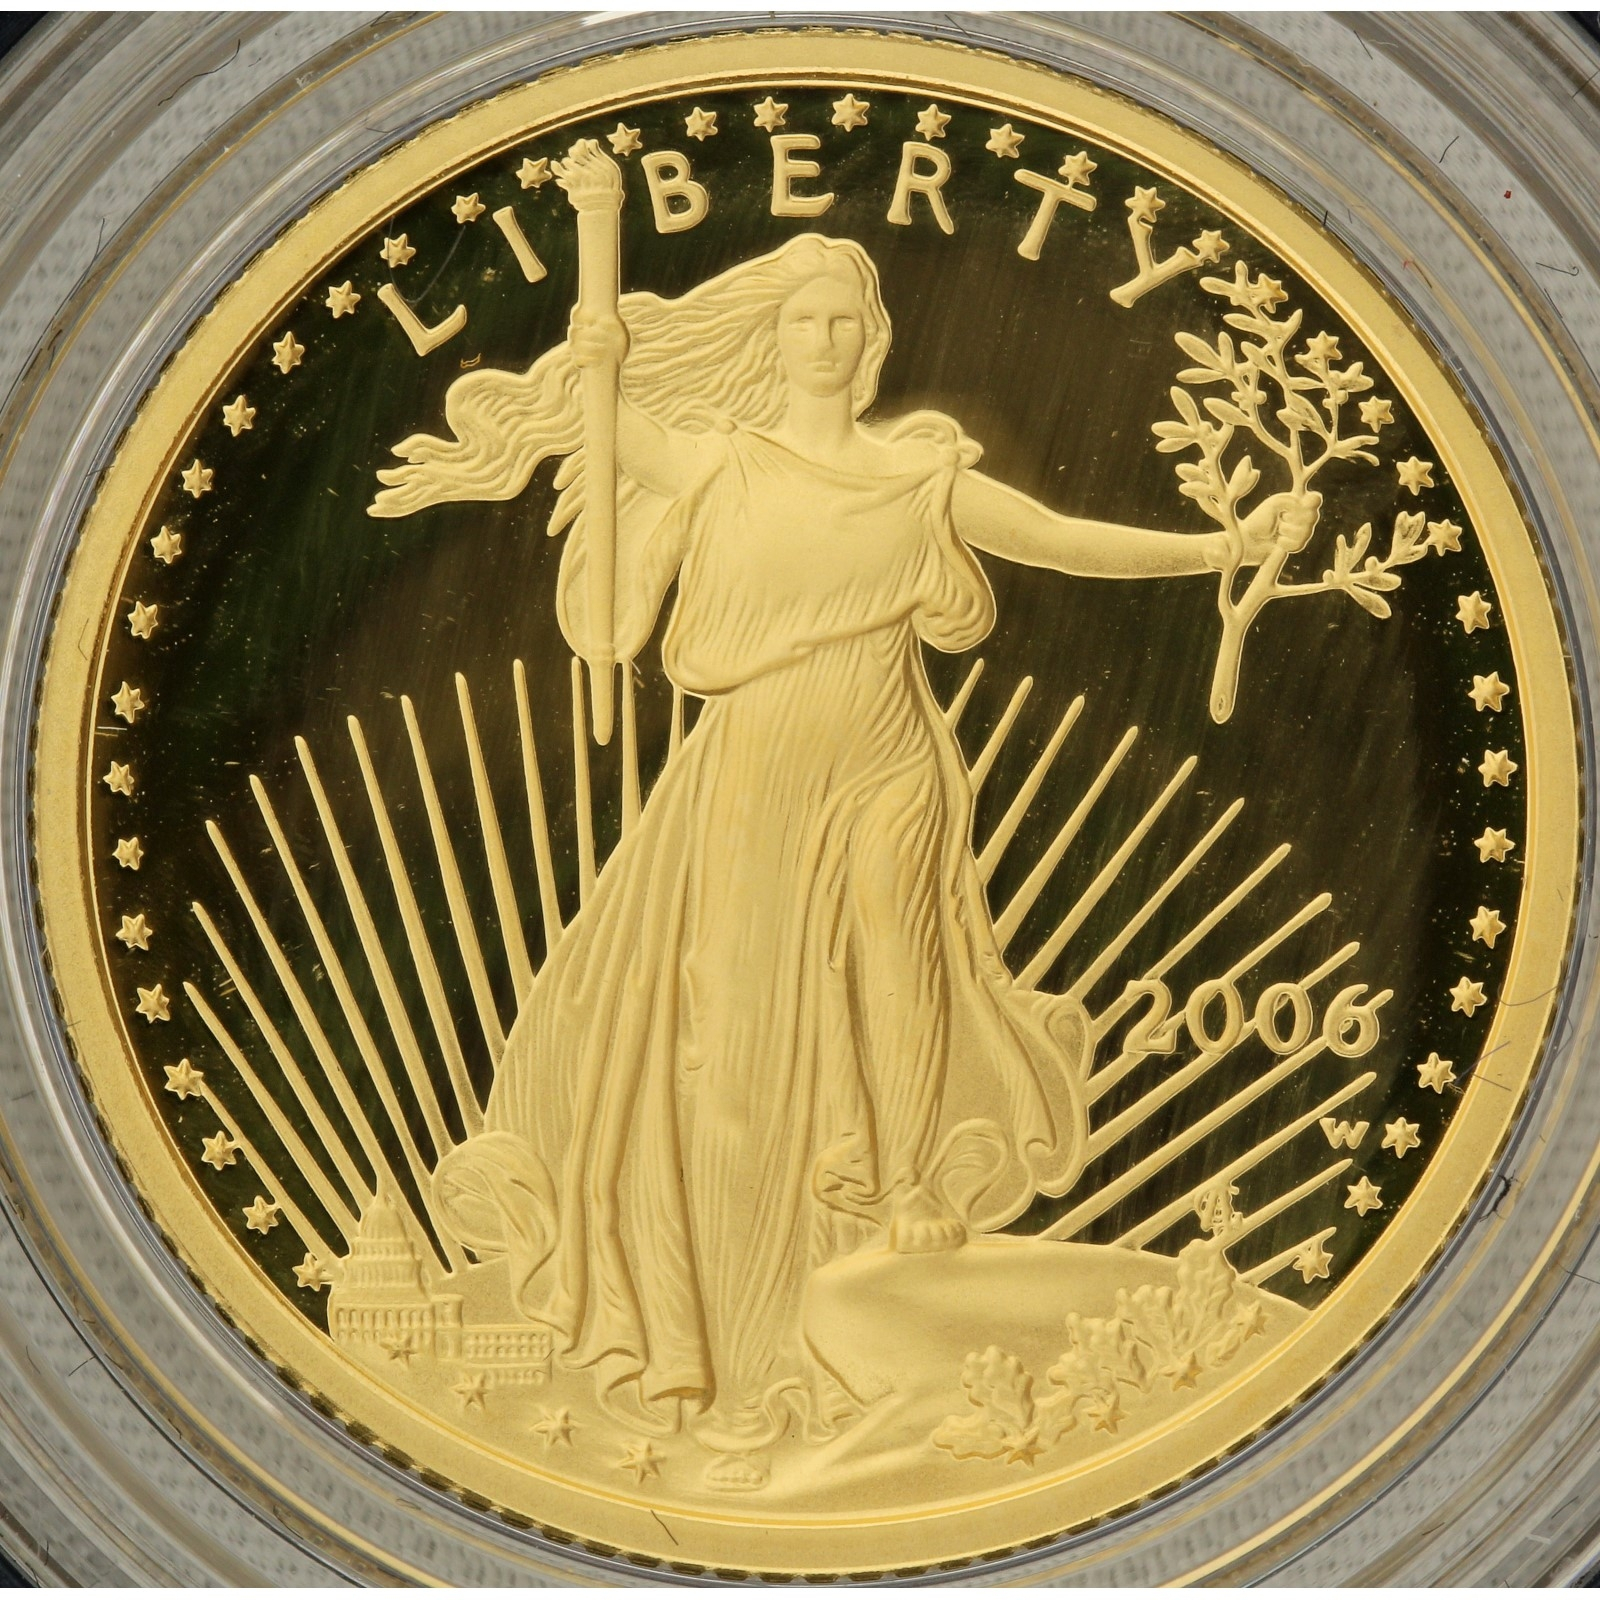 USA - 10 dollars - 2006 - W - PROOF - gold eagle - 1/4oz